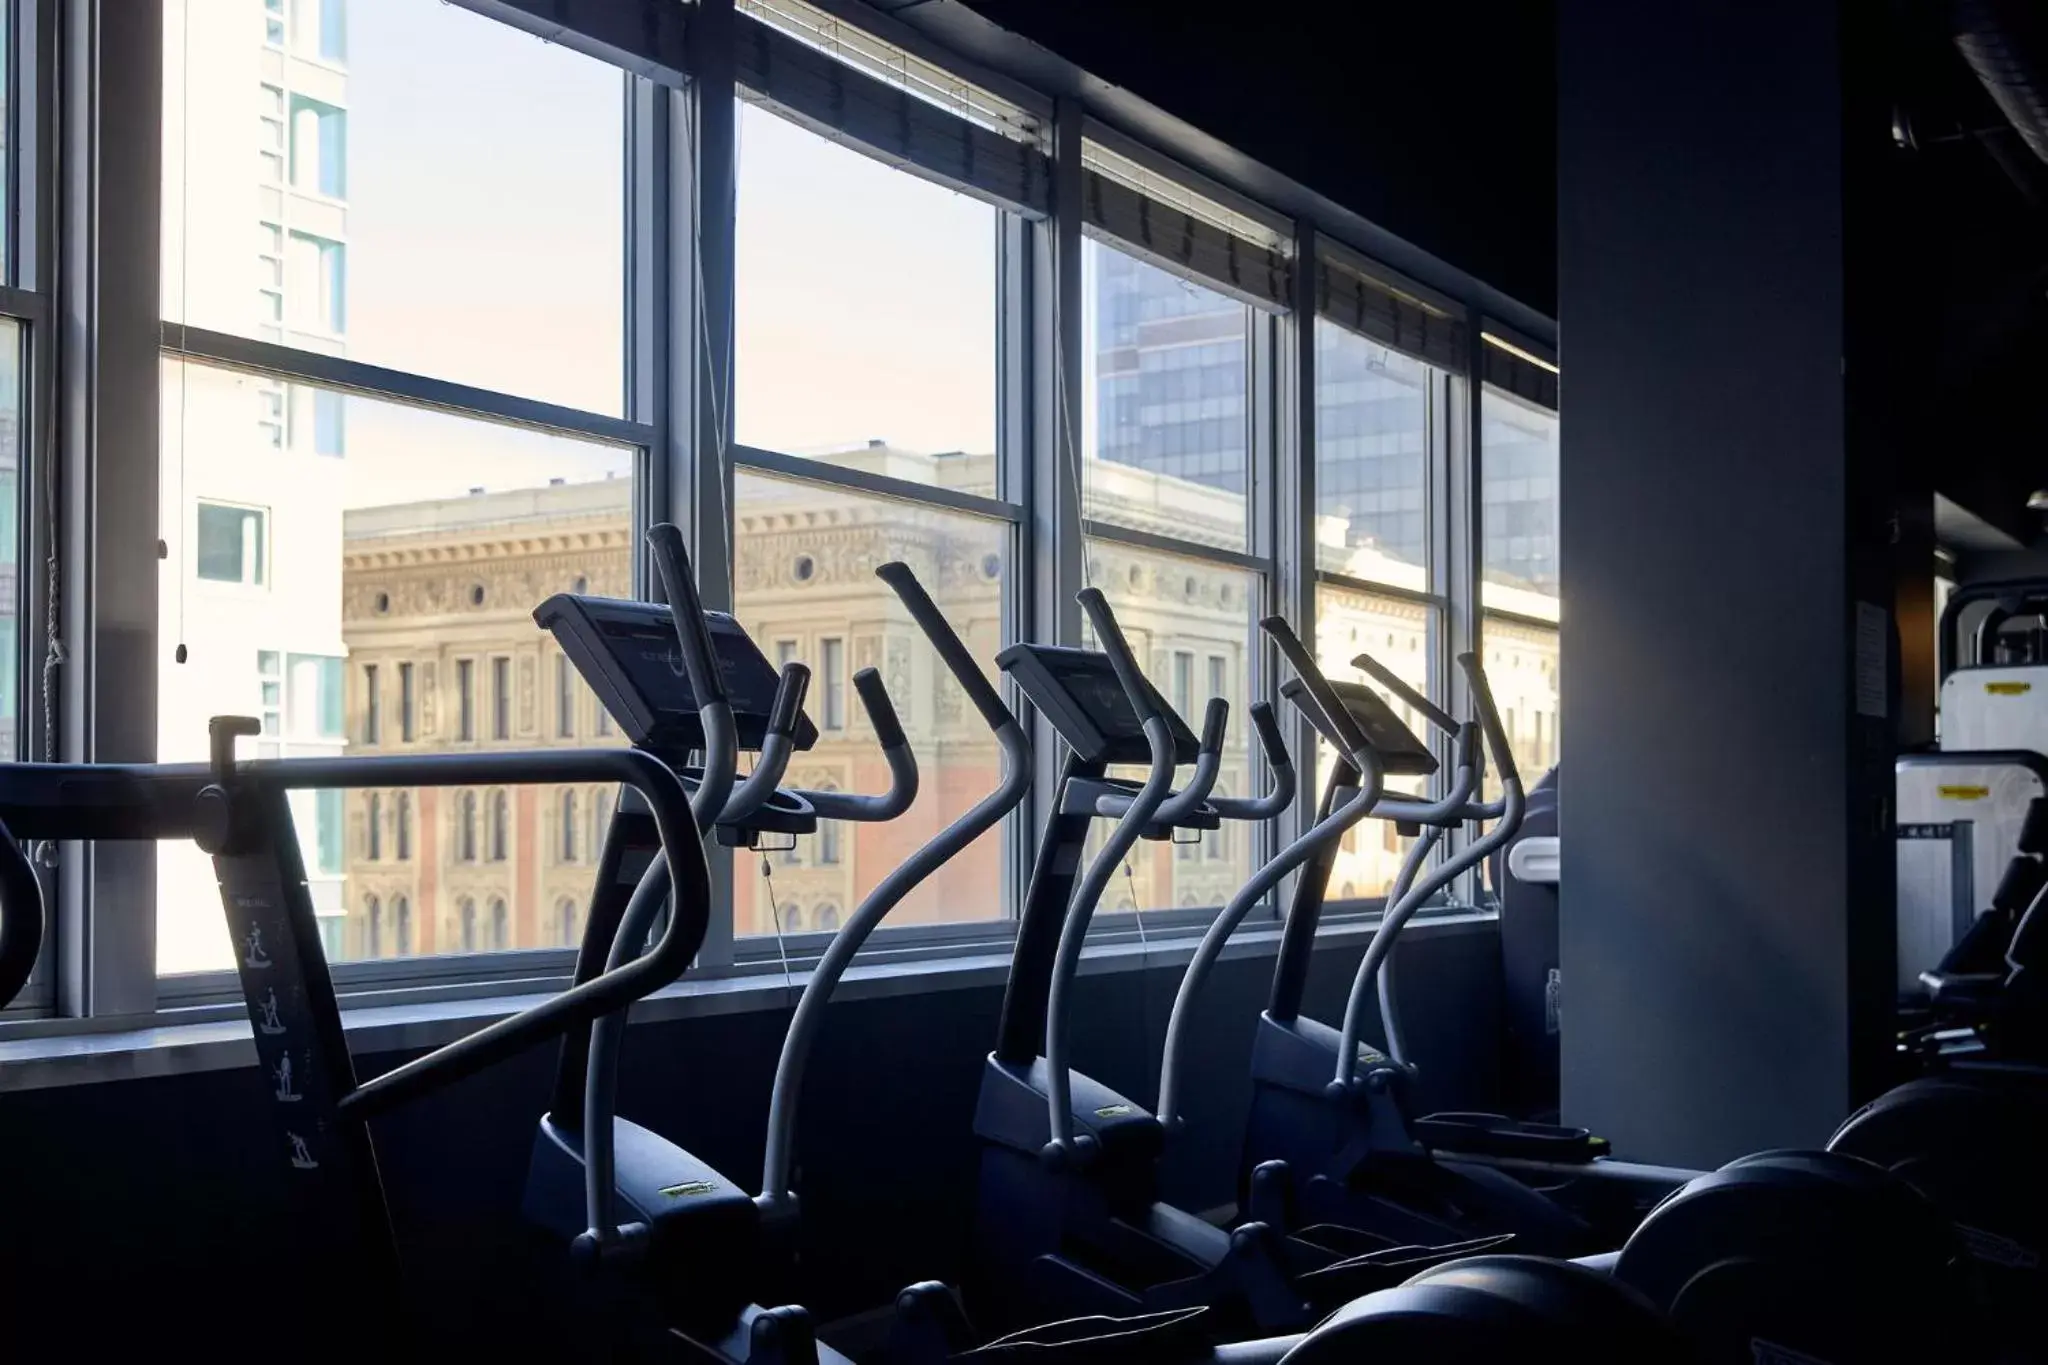 Fitness centre/facilities, Fitness Center/Facilities in Loews Philadelphia Hotel